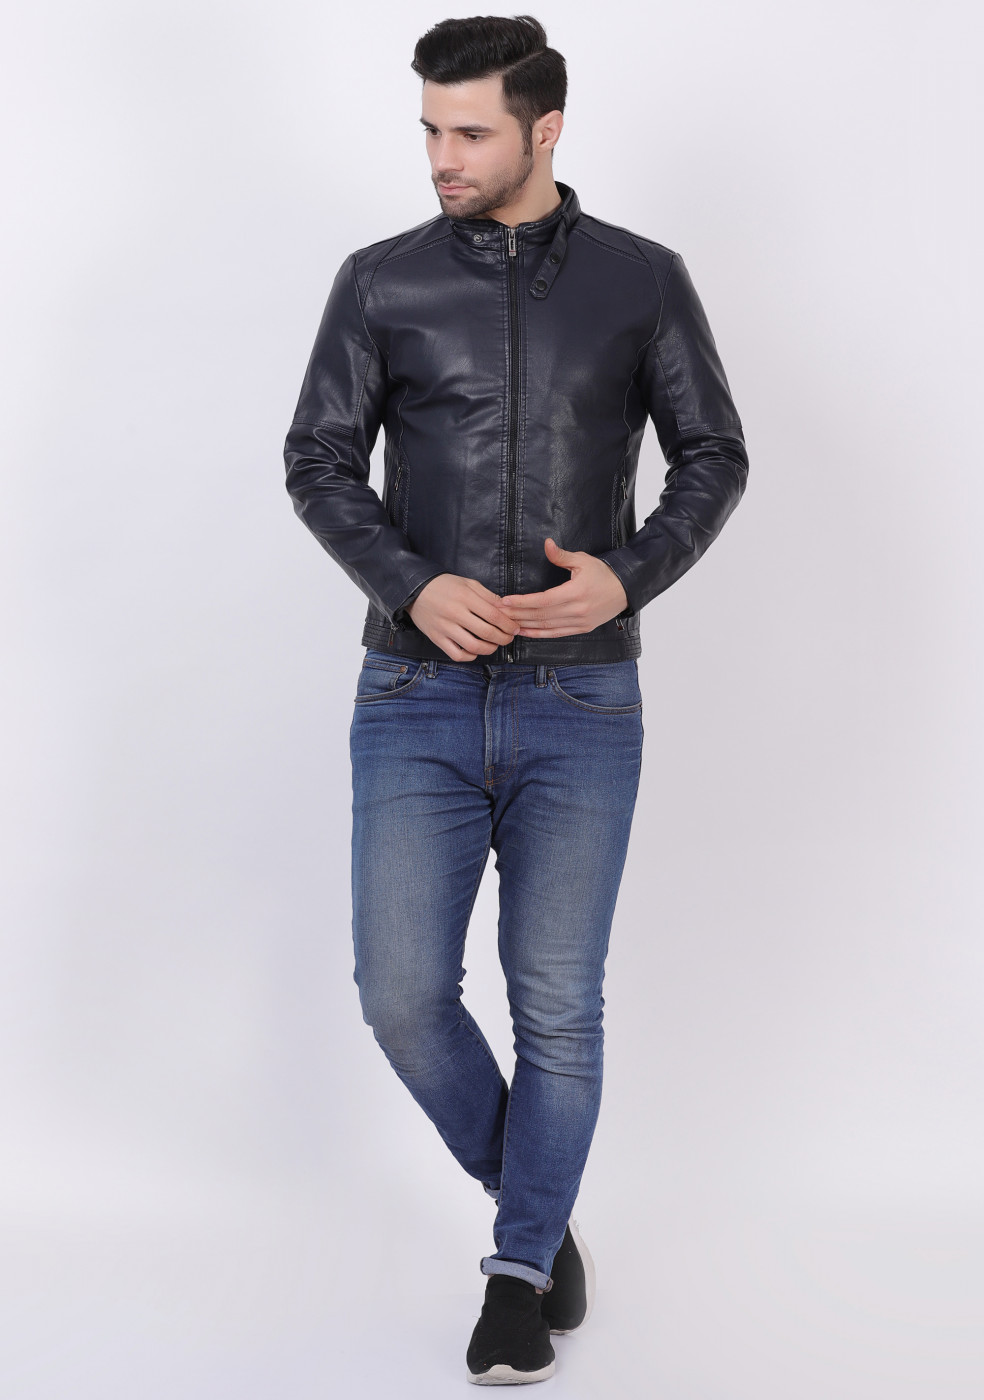 Zaria Blue Leather Jacket – Sculpt Leather Jackets